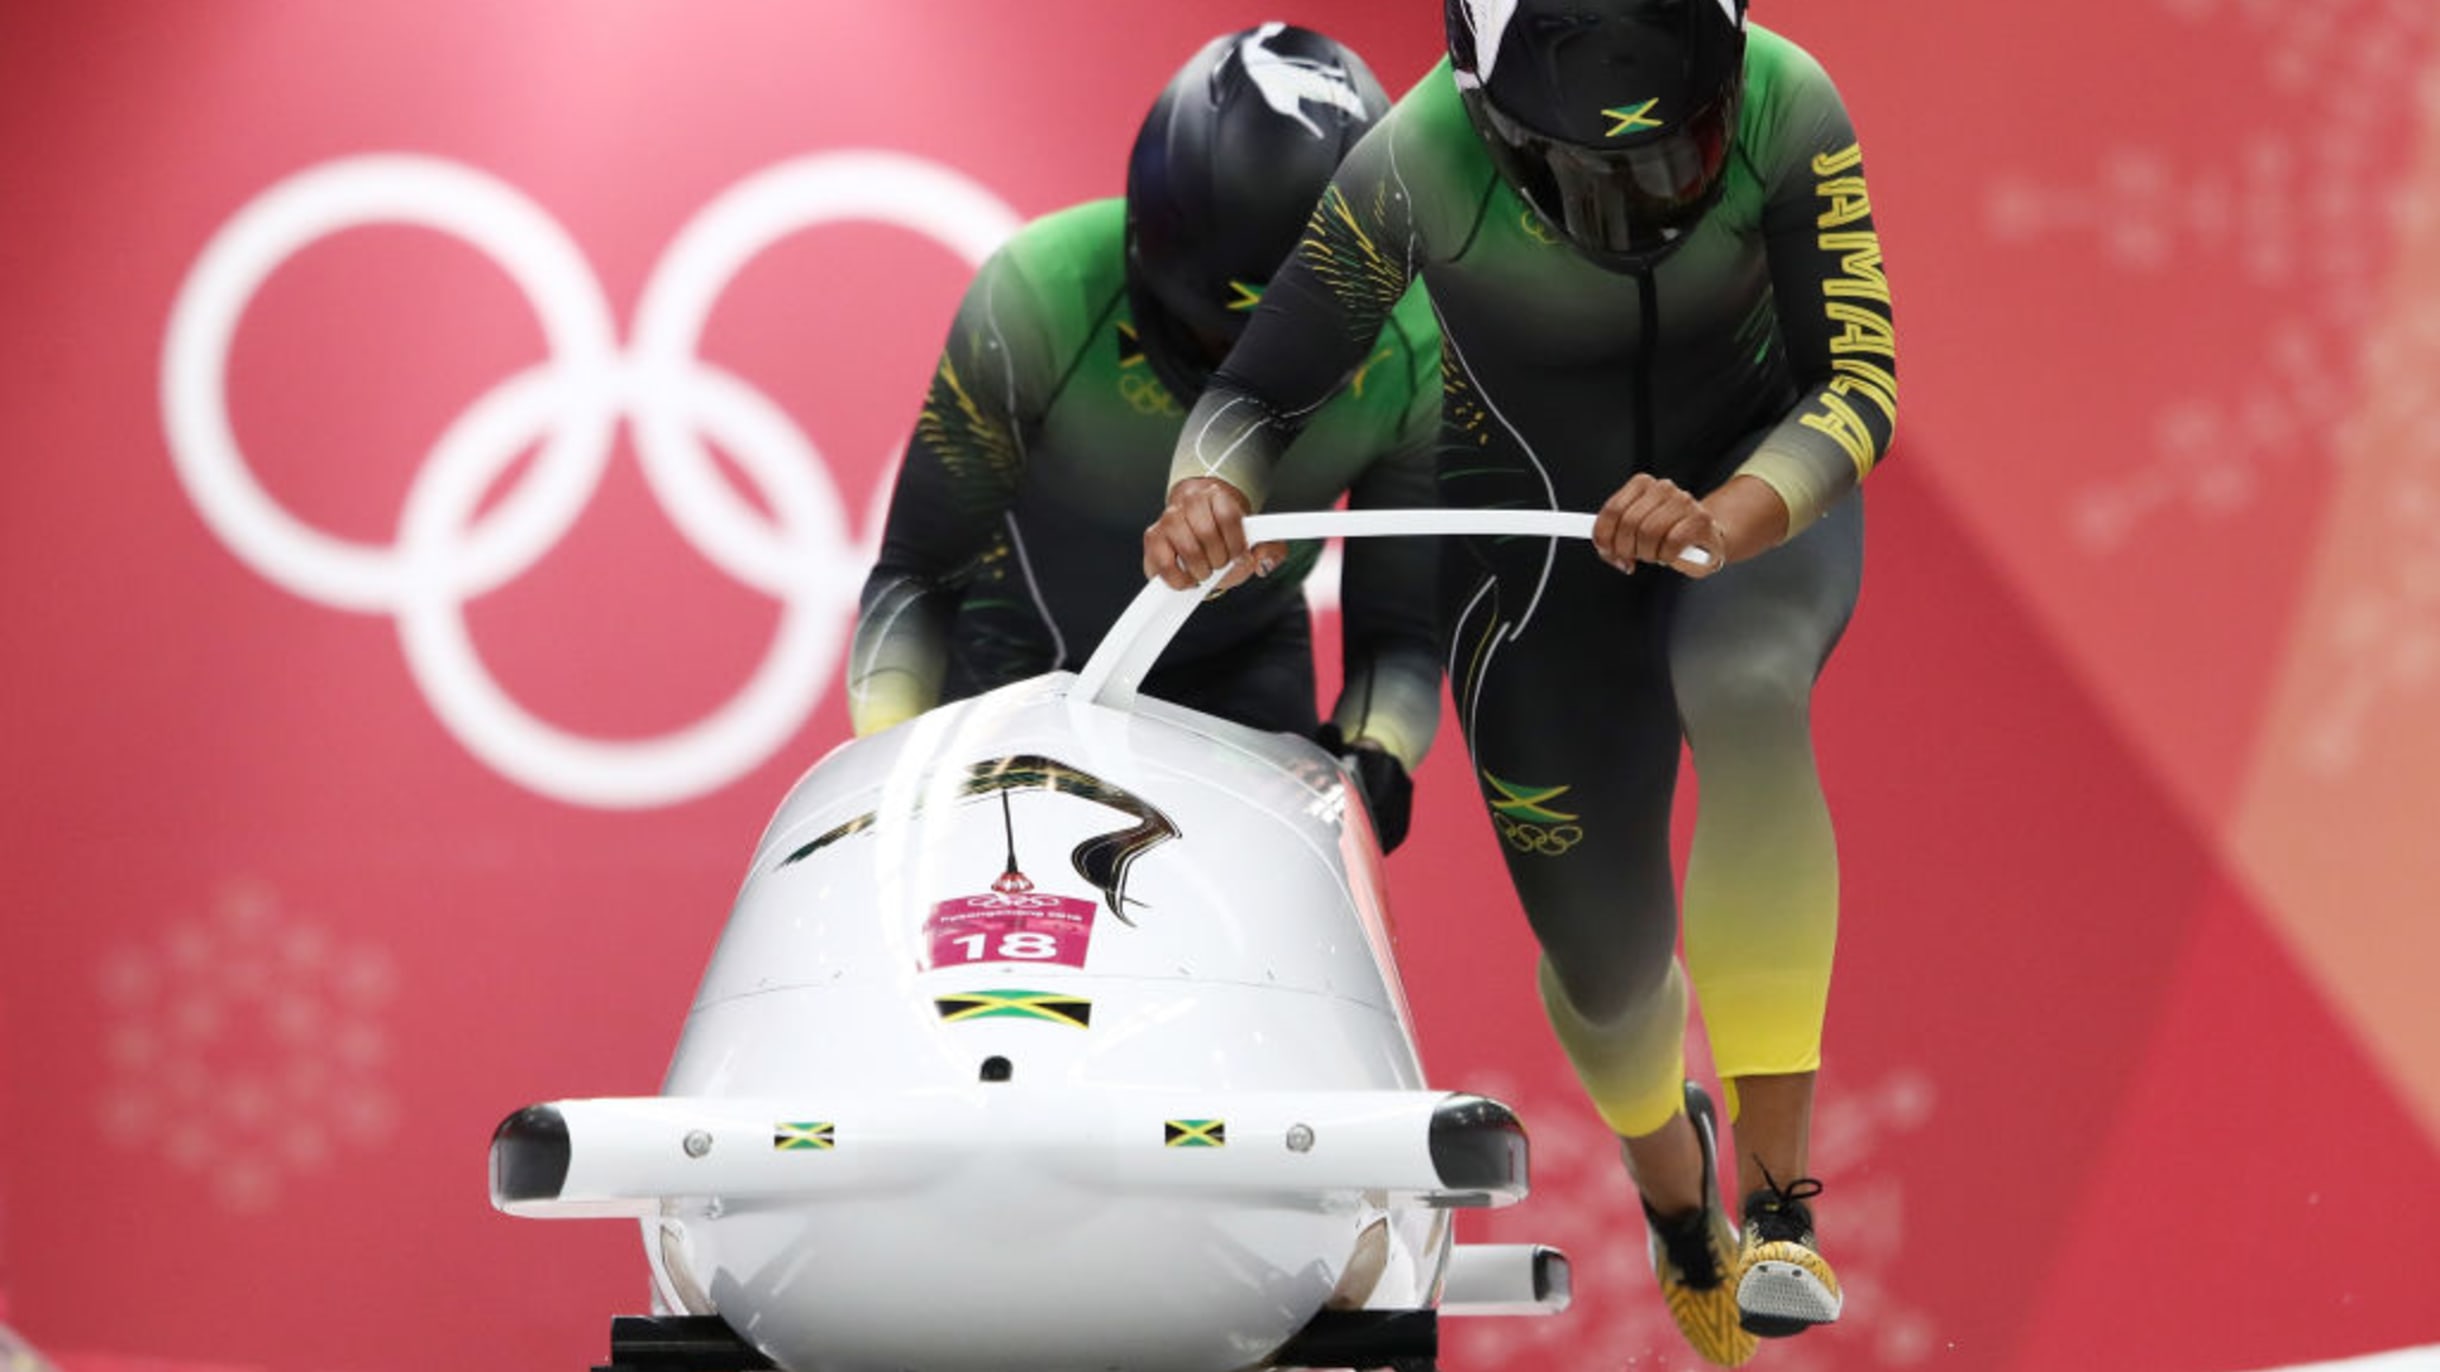 Jamaica qualifies three bobsleigh teams for Beijing 2022